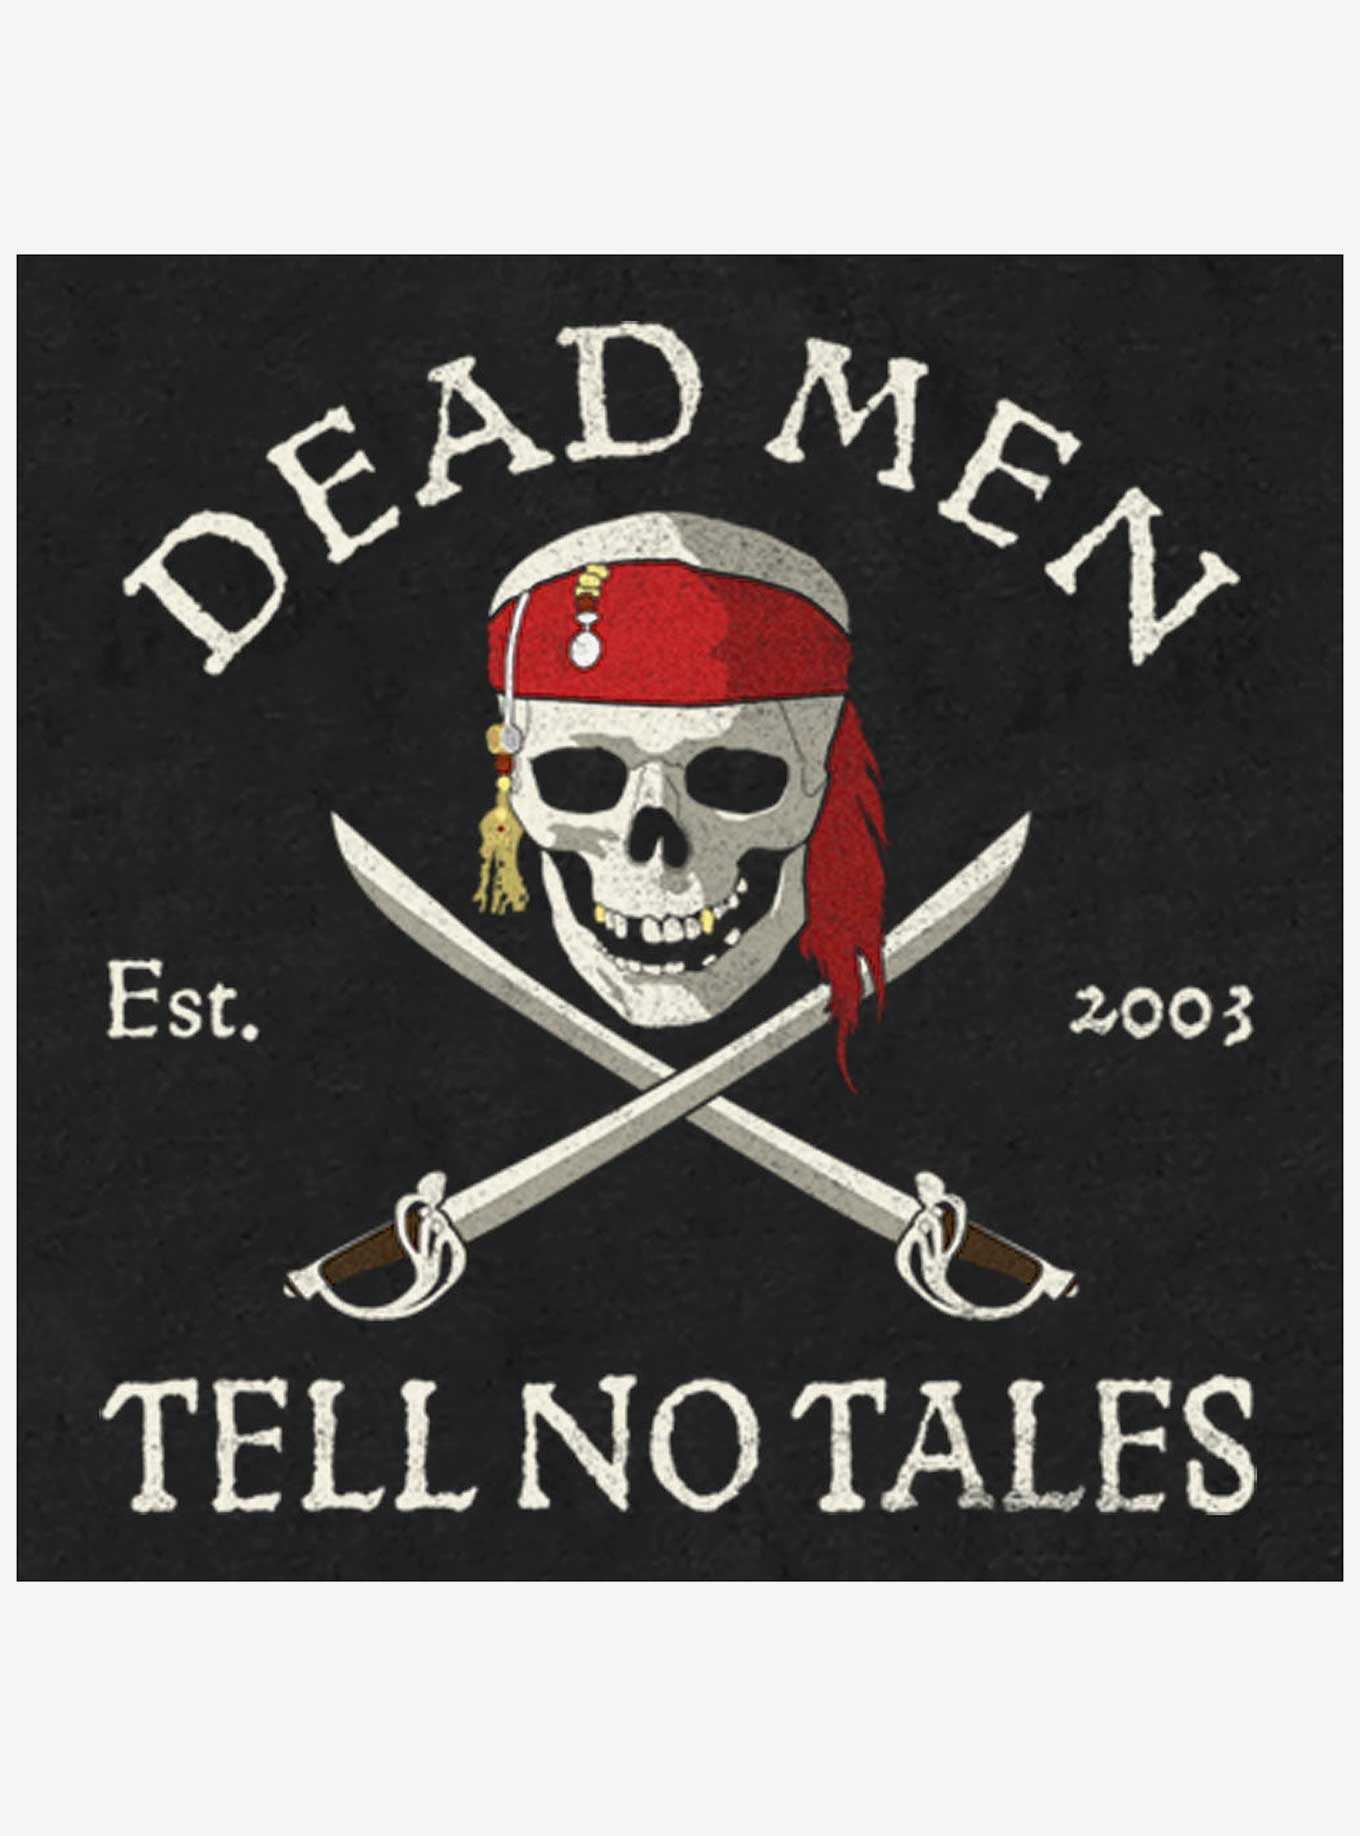 Disney Pirates of the Caribbean Tell No Tales T-Shirt, , hi-res